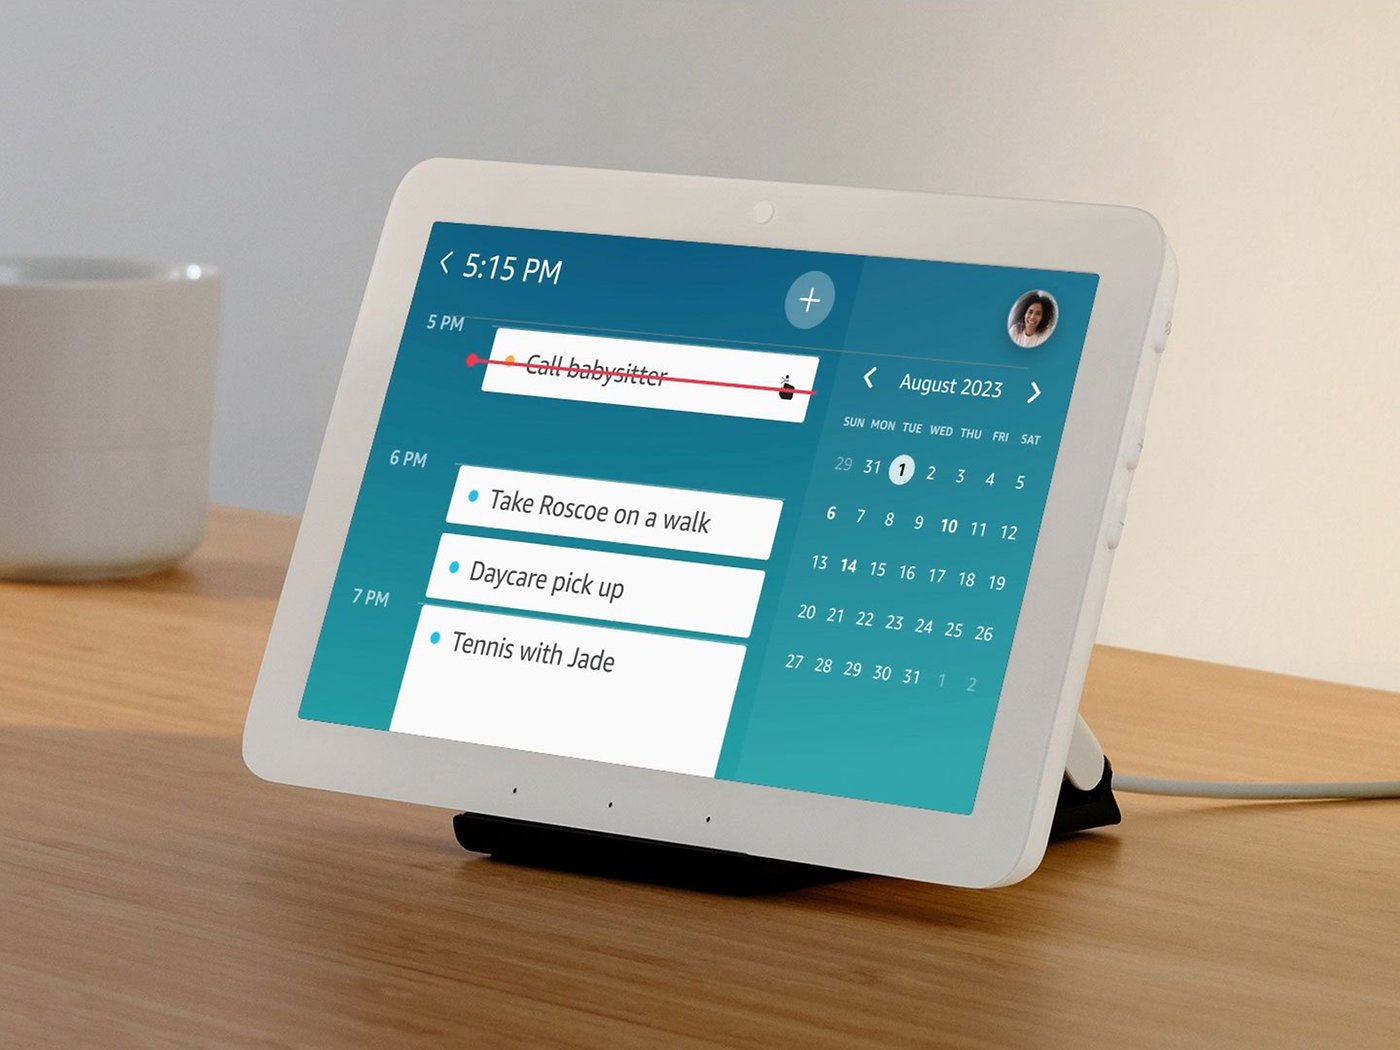 Echo Hub - Smart Home Dashboard